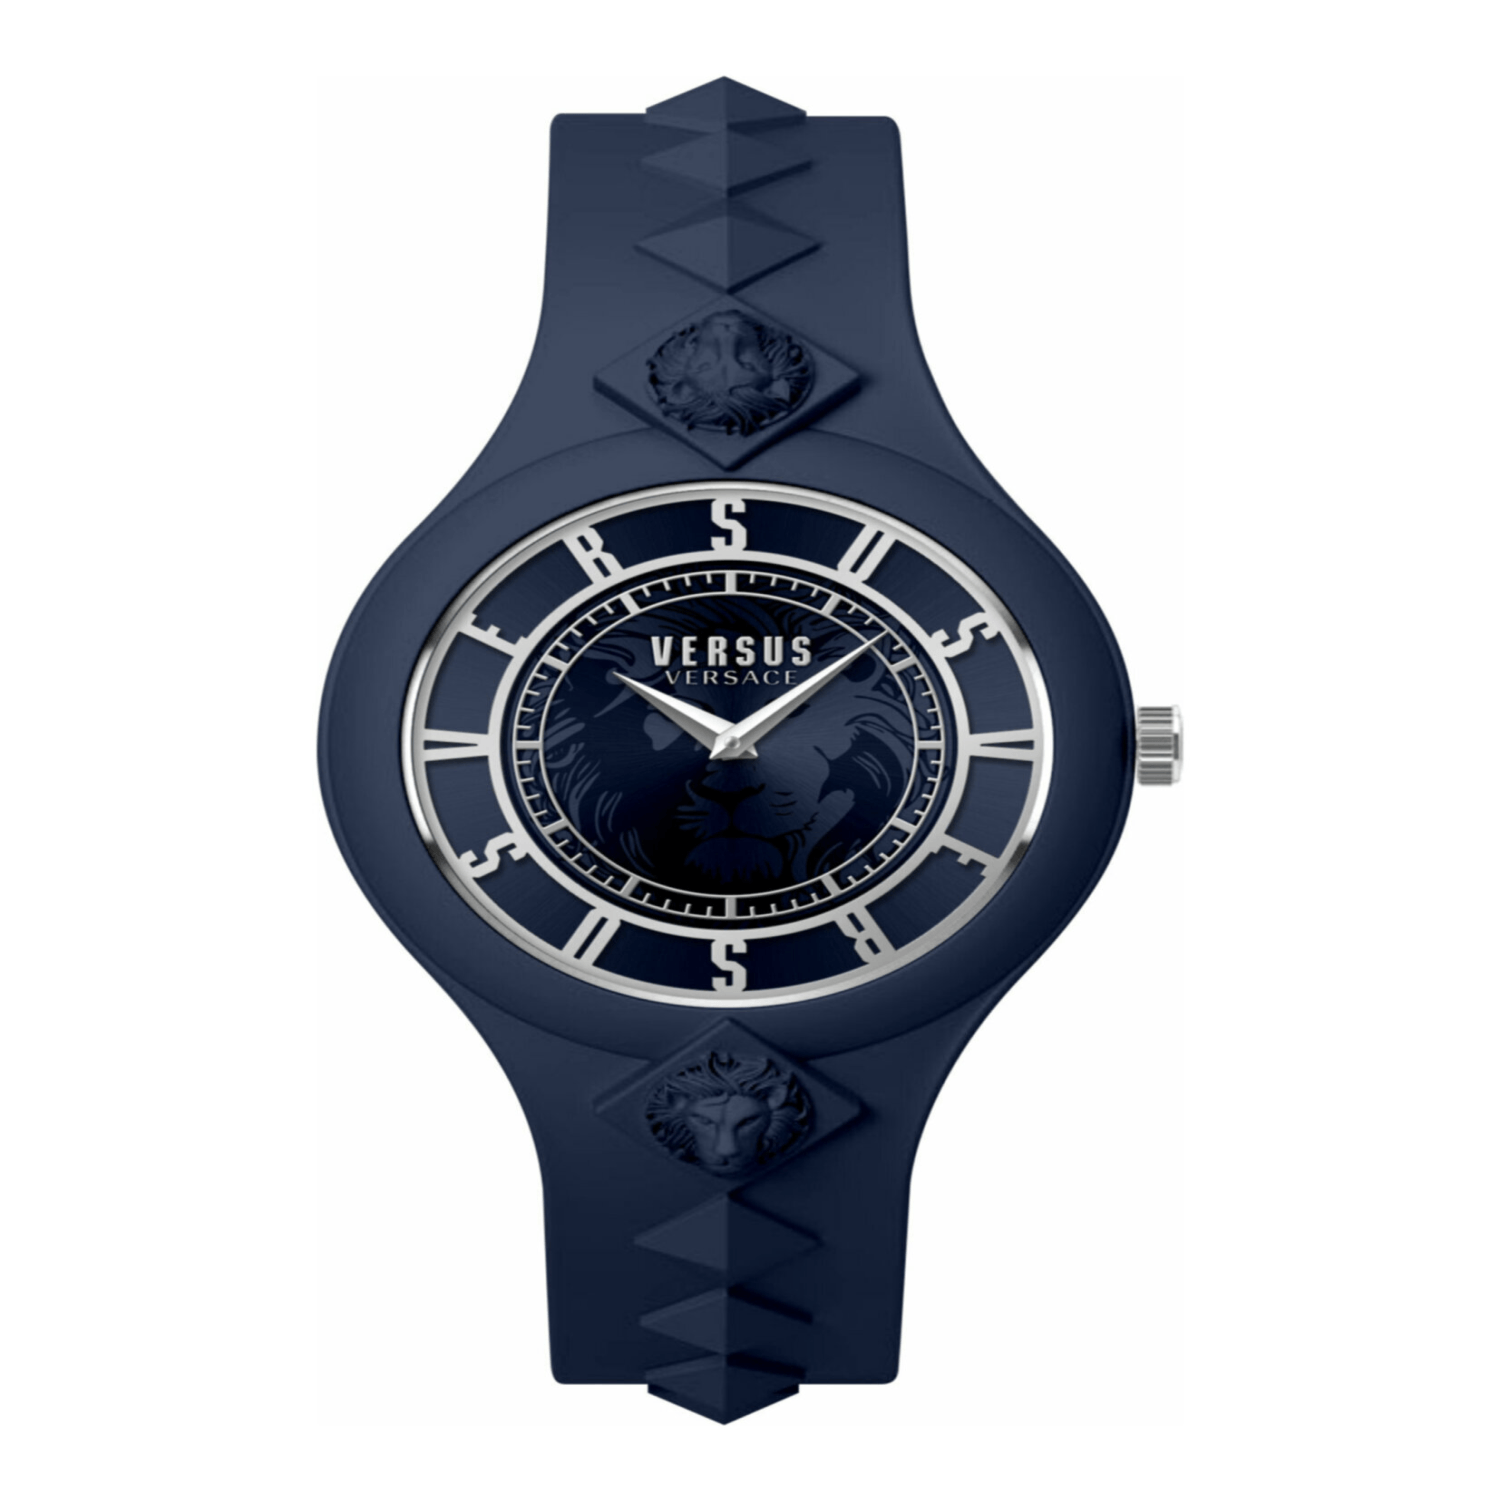 Reloj Versus Versace Fire Island Studs Watch VSP1R1821 para Mujer en Azul